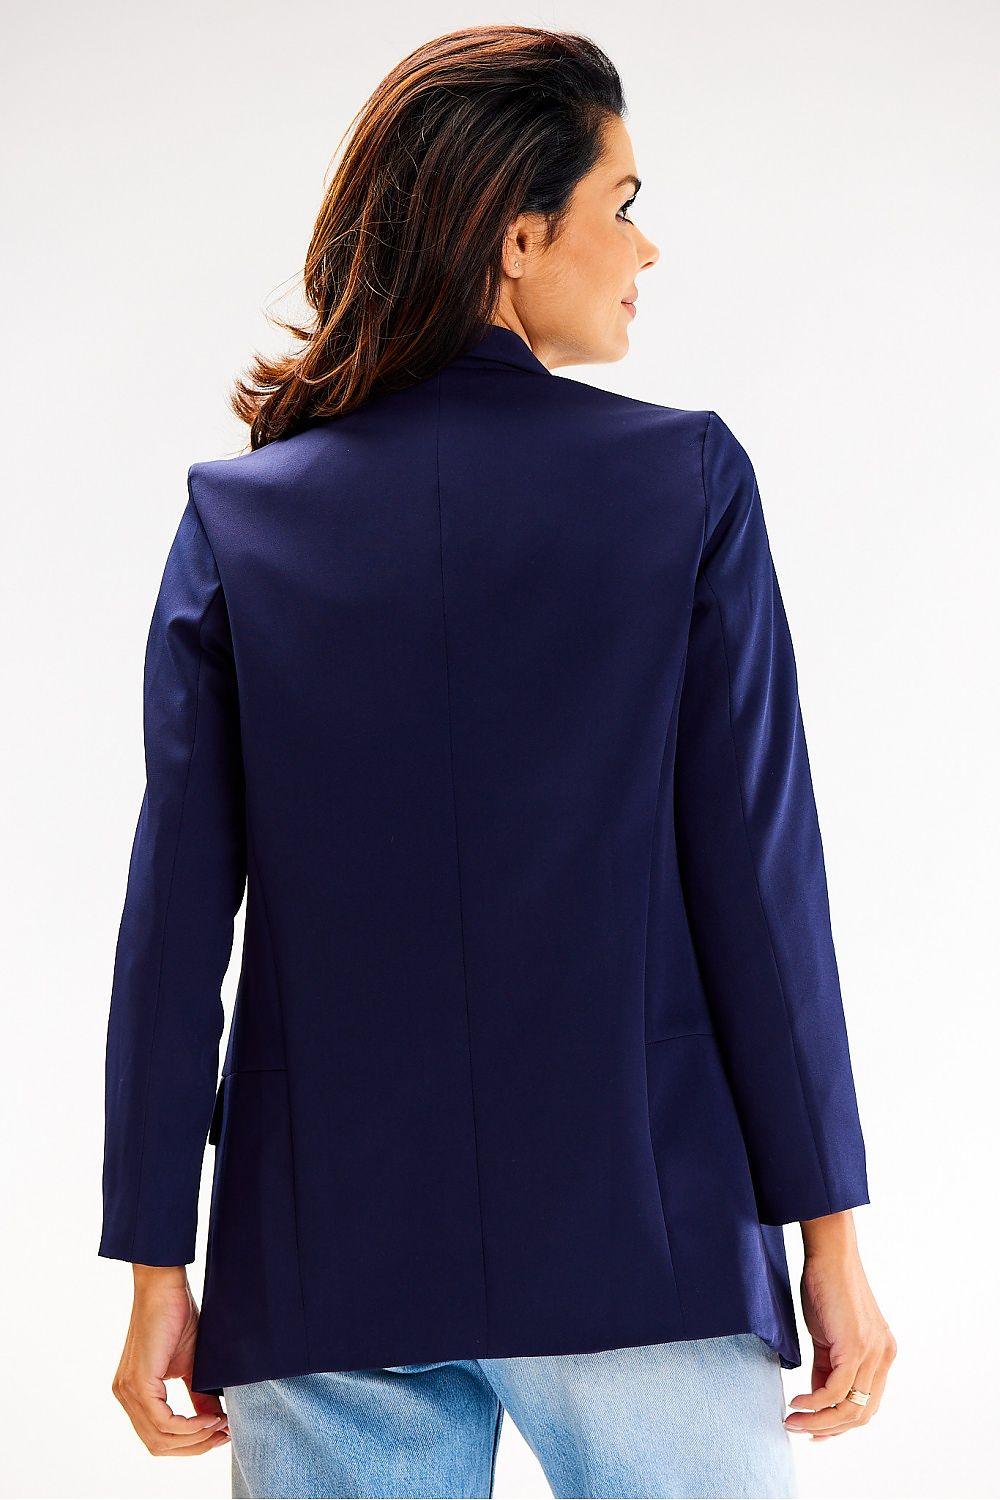 Jacket model 187115 awama - Lucianne Boutique